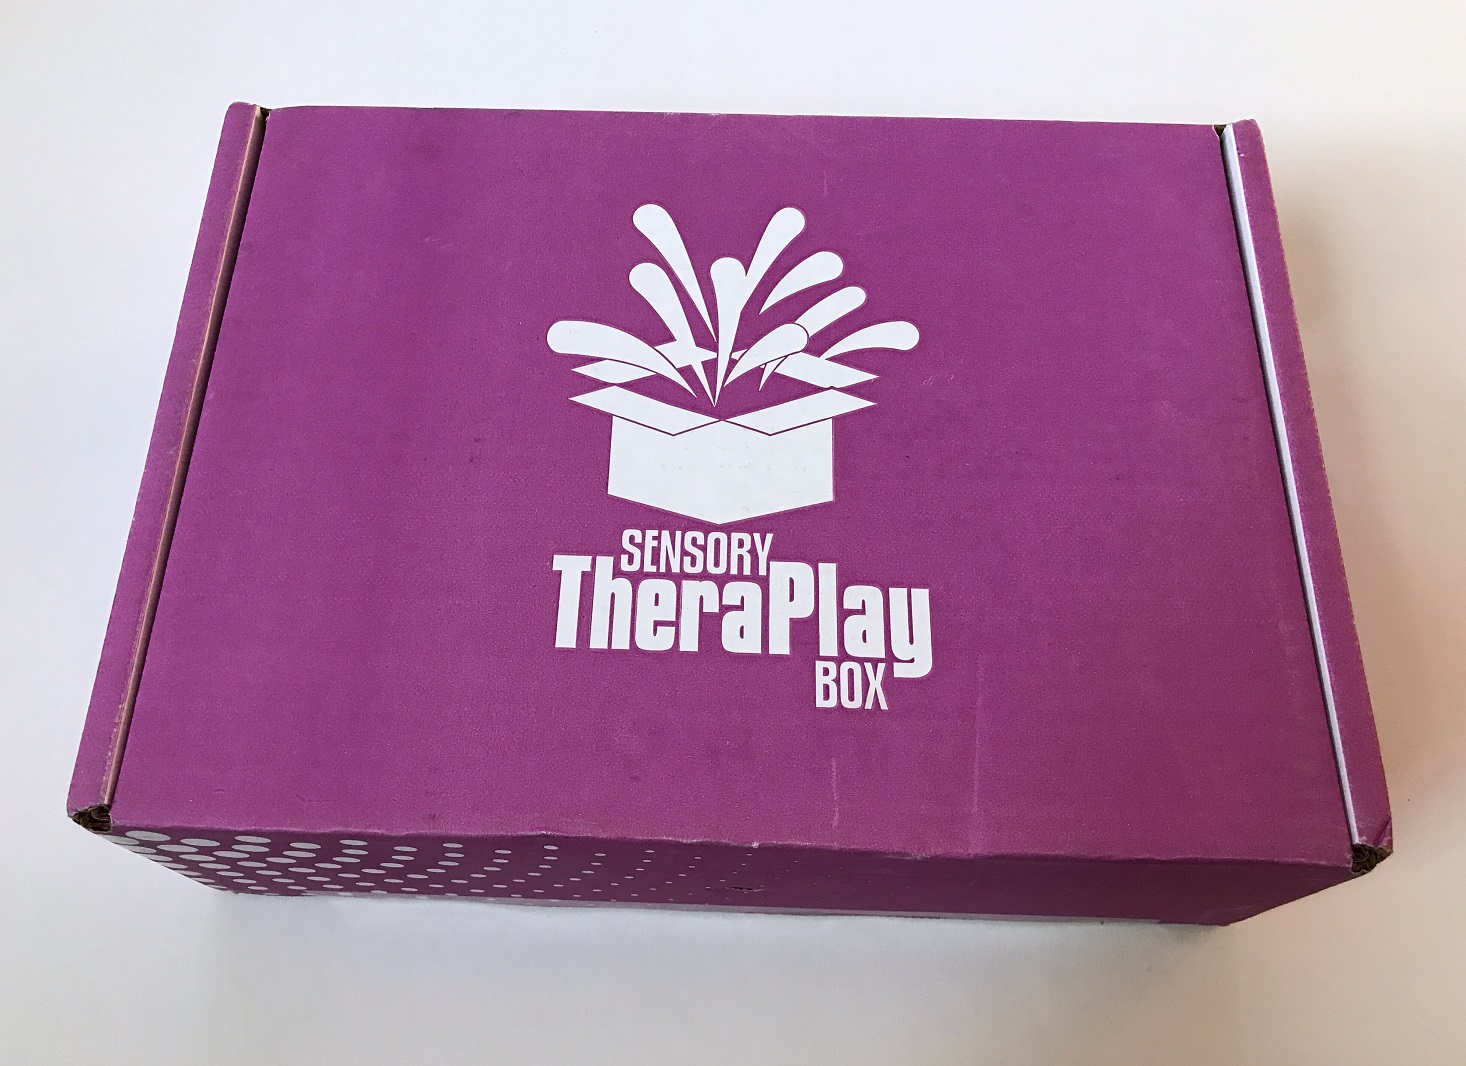 Sensory TheraPlay Box Review + Coupon – December 2017